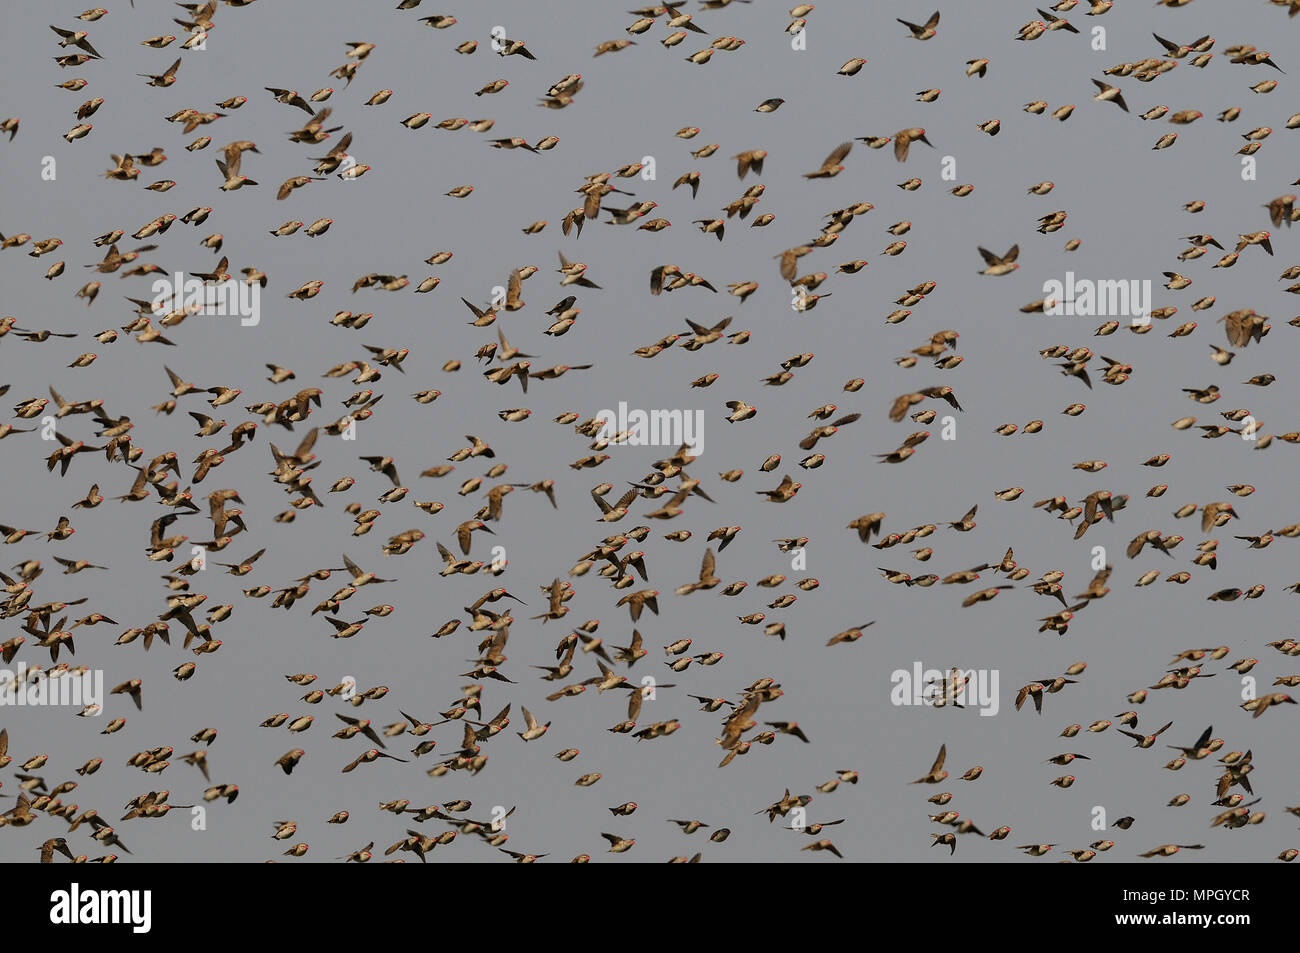 Redbilled quelea swarm in the sky, (quelea quelea),  etosha national park, namibia Stock Photo